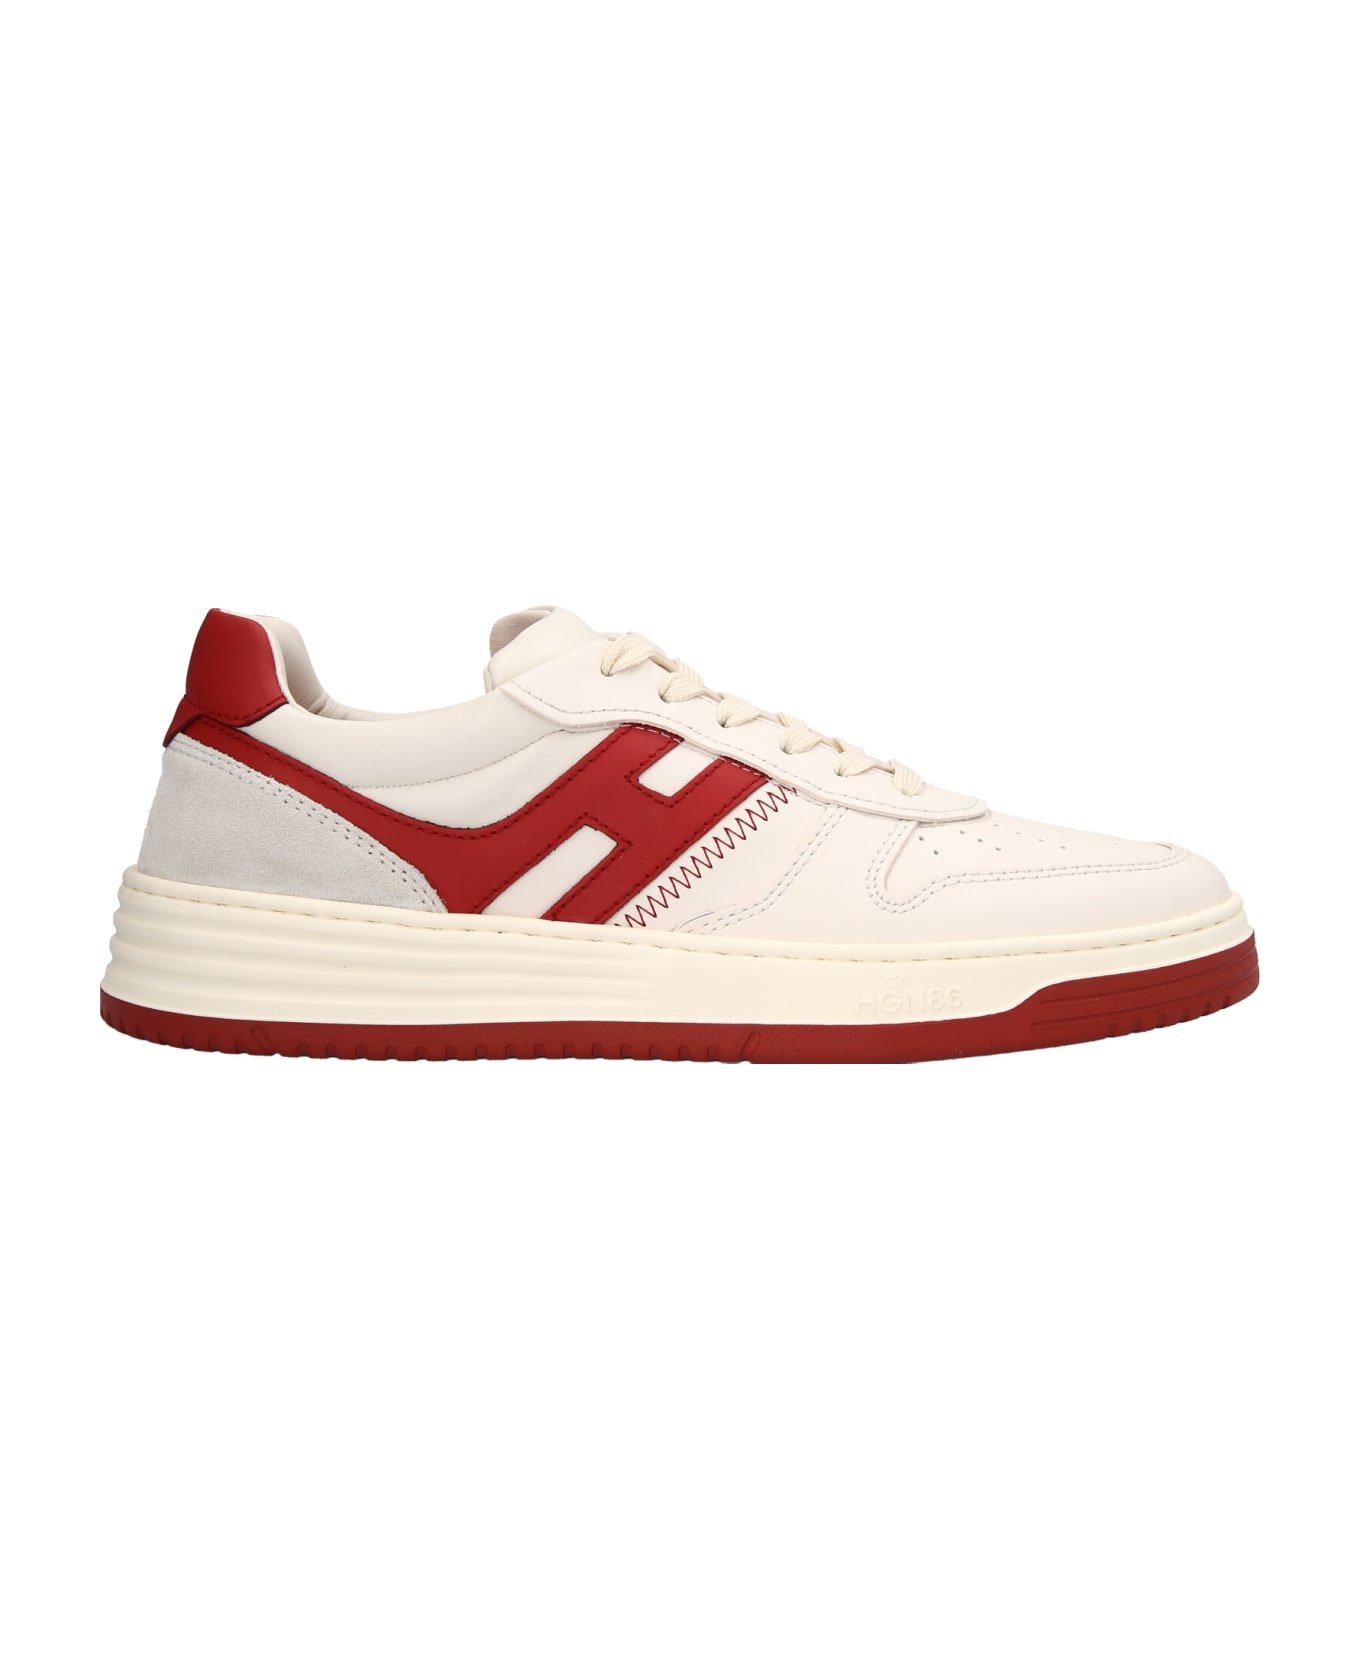 Hogan 'h630' Sneakers - Red スニーカー